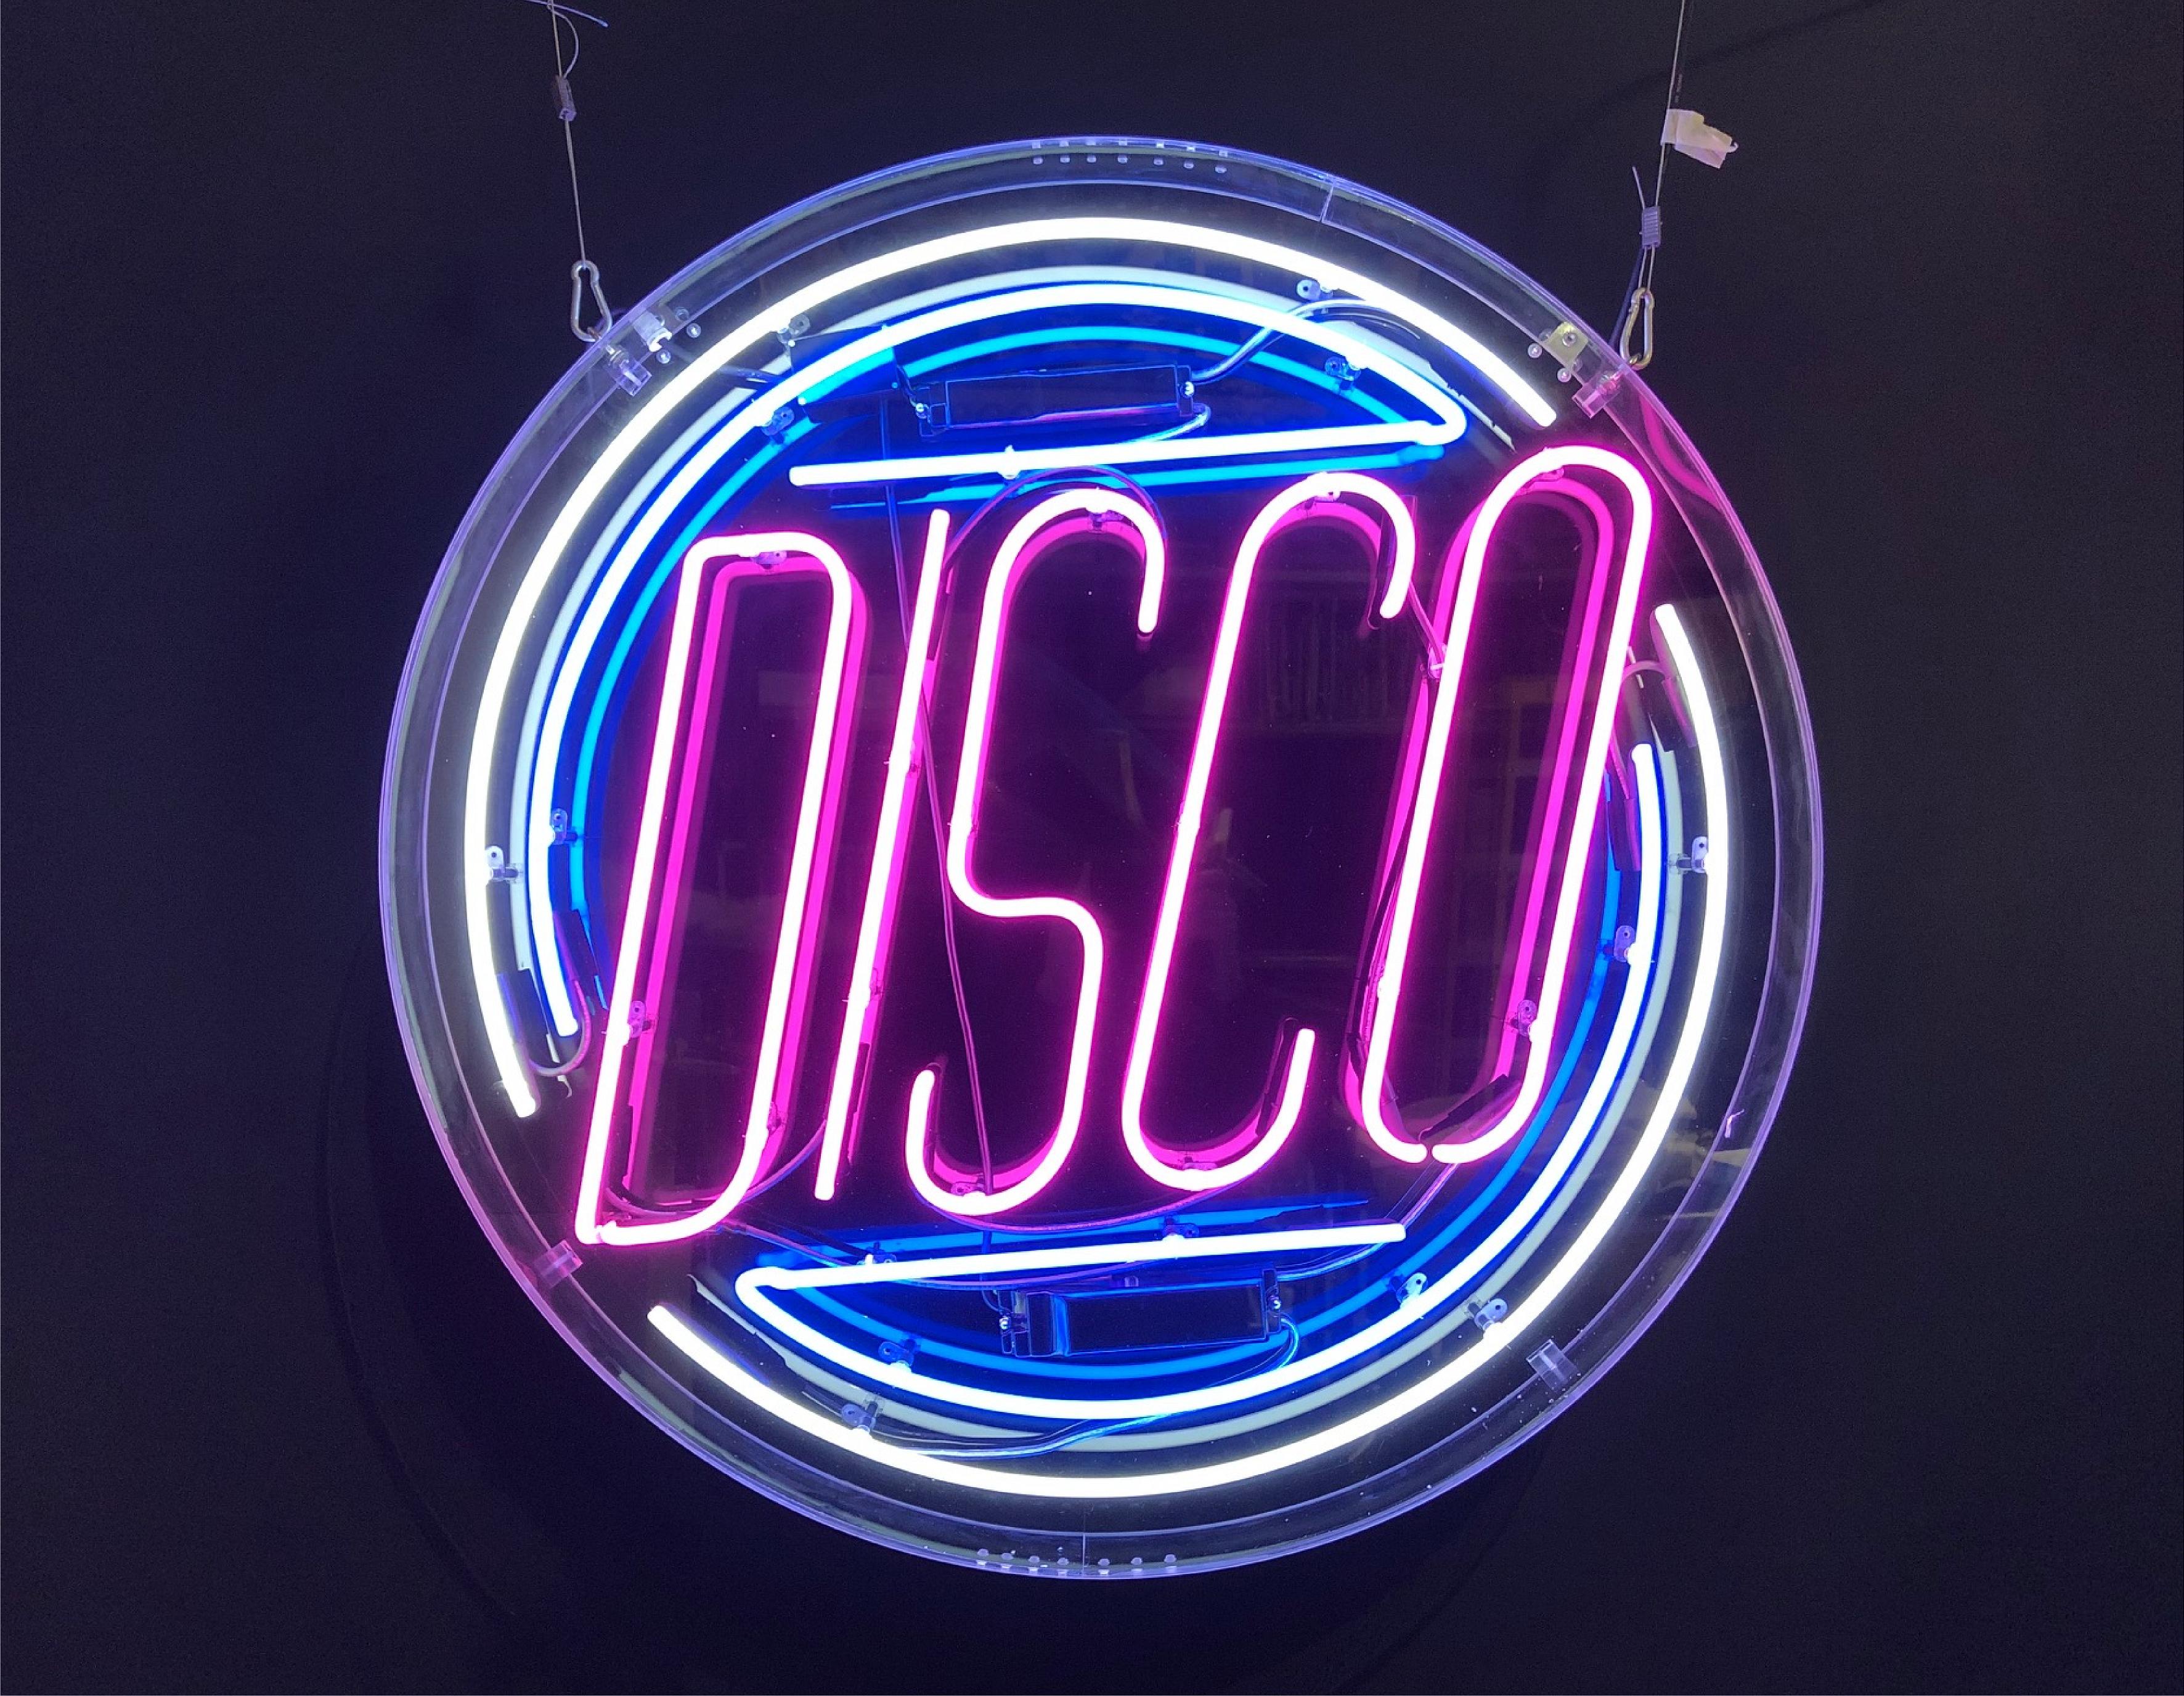 Disco neon – diameter 1m - Kemp London - Bespoke neon signs, prop hire